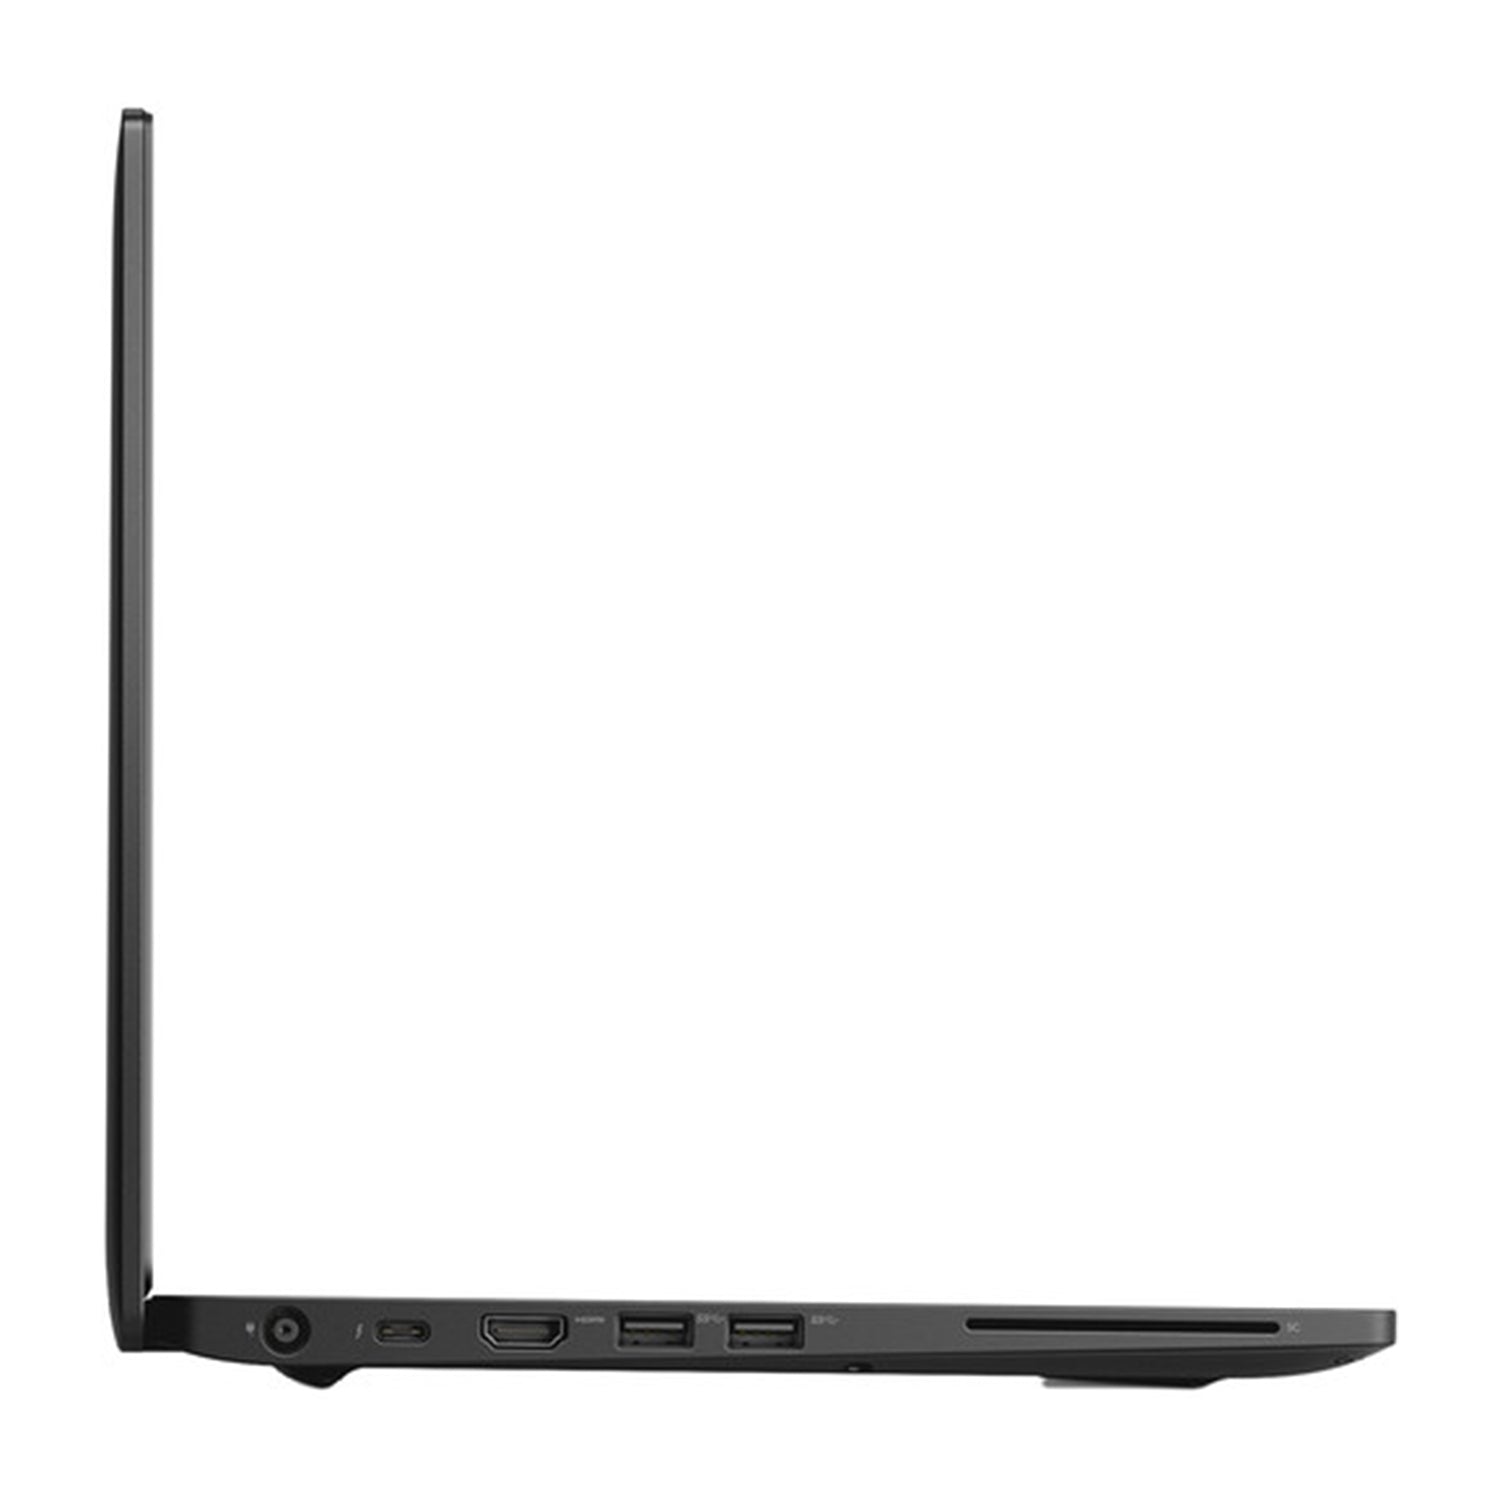 Dell Latitude 7490 Laptop | 14 inch FHD Anti-Glare Display | Intel Core i5 - (8350U) 8th Gen | 8GB - 32GB DDR4 RAM | 256GB - 1TB SSD | Windows 11 Pro | HDMI | Webcam | Backlit Keyboard - Refurbished